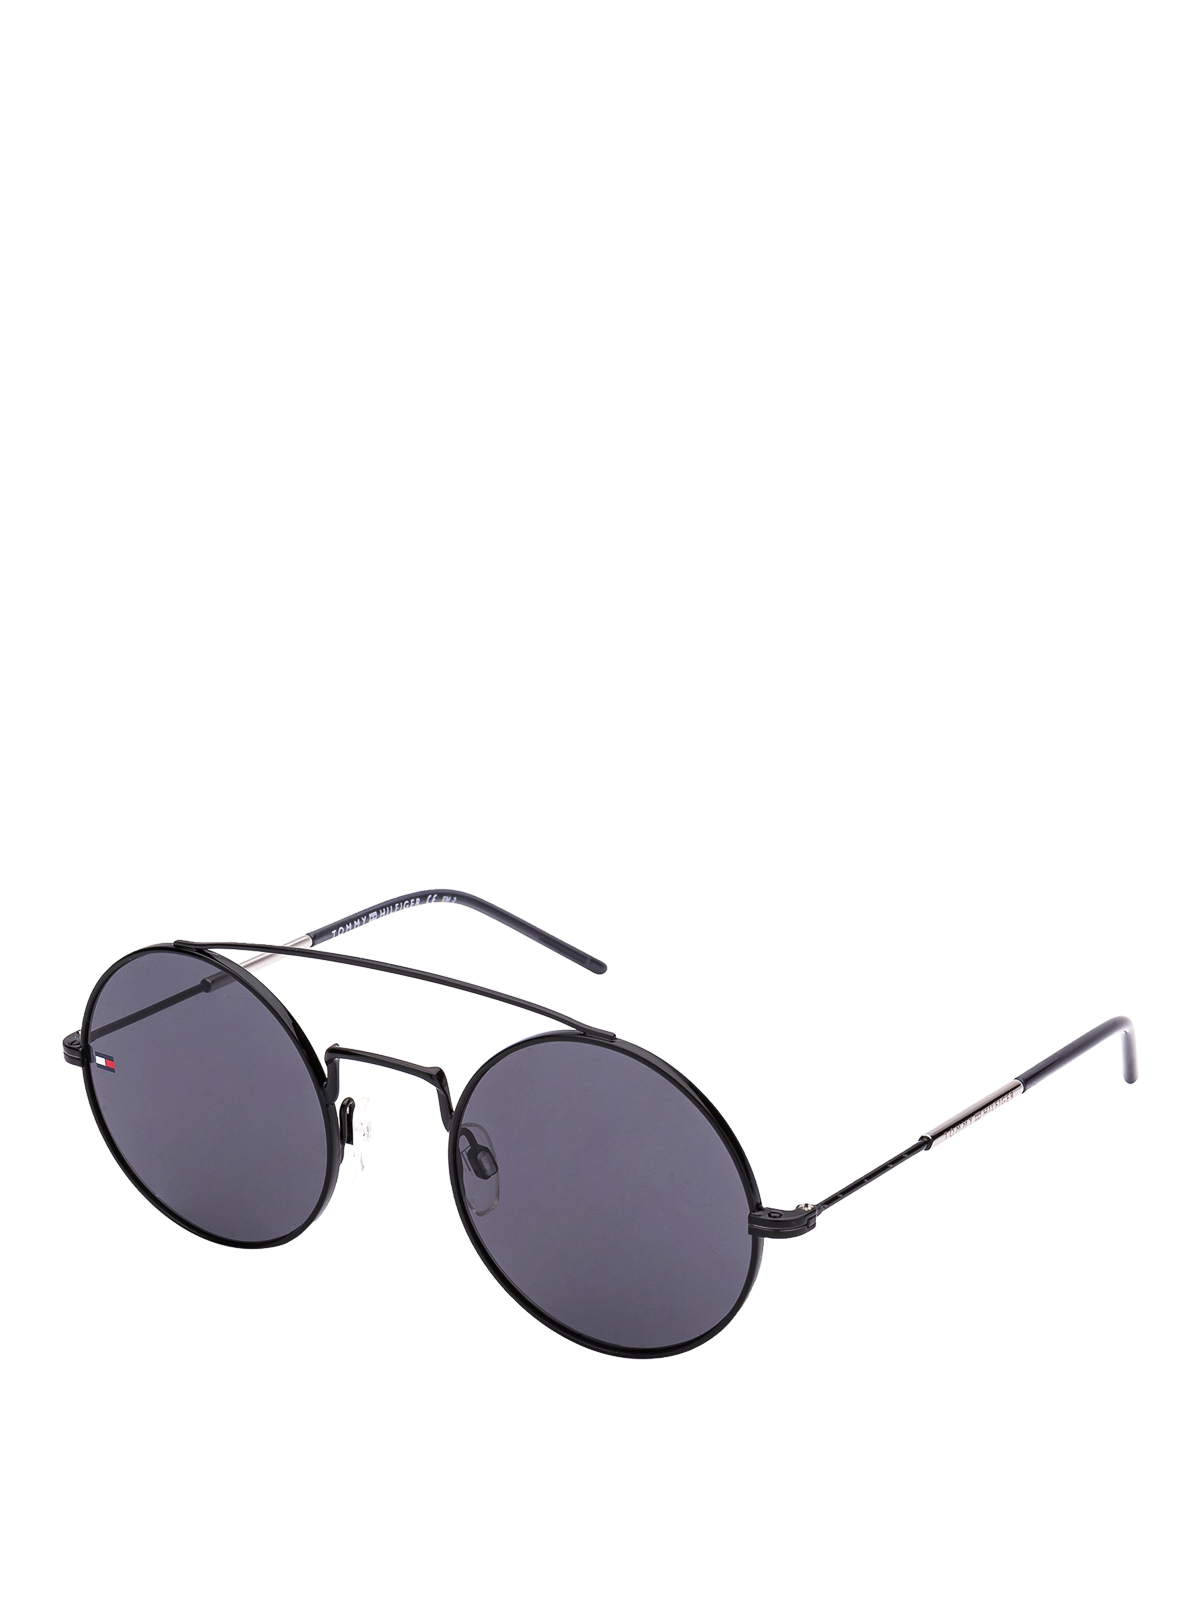 tommy hilfiger black aviator sunglasses